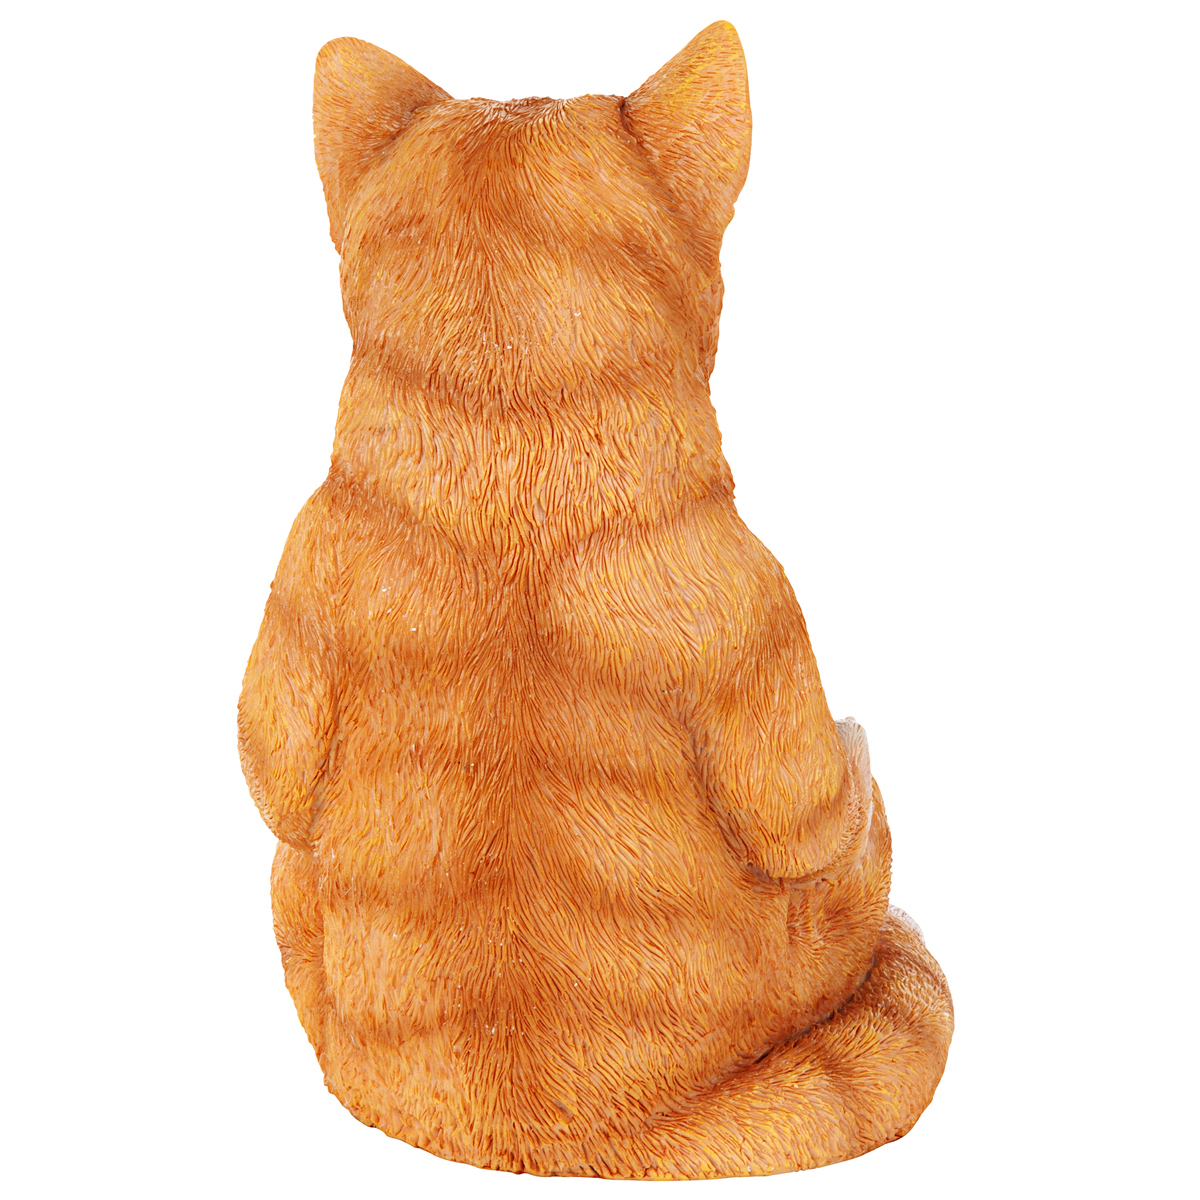 Image Thumbnail for Zen Kitty Meditating Cat Statue